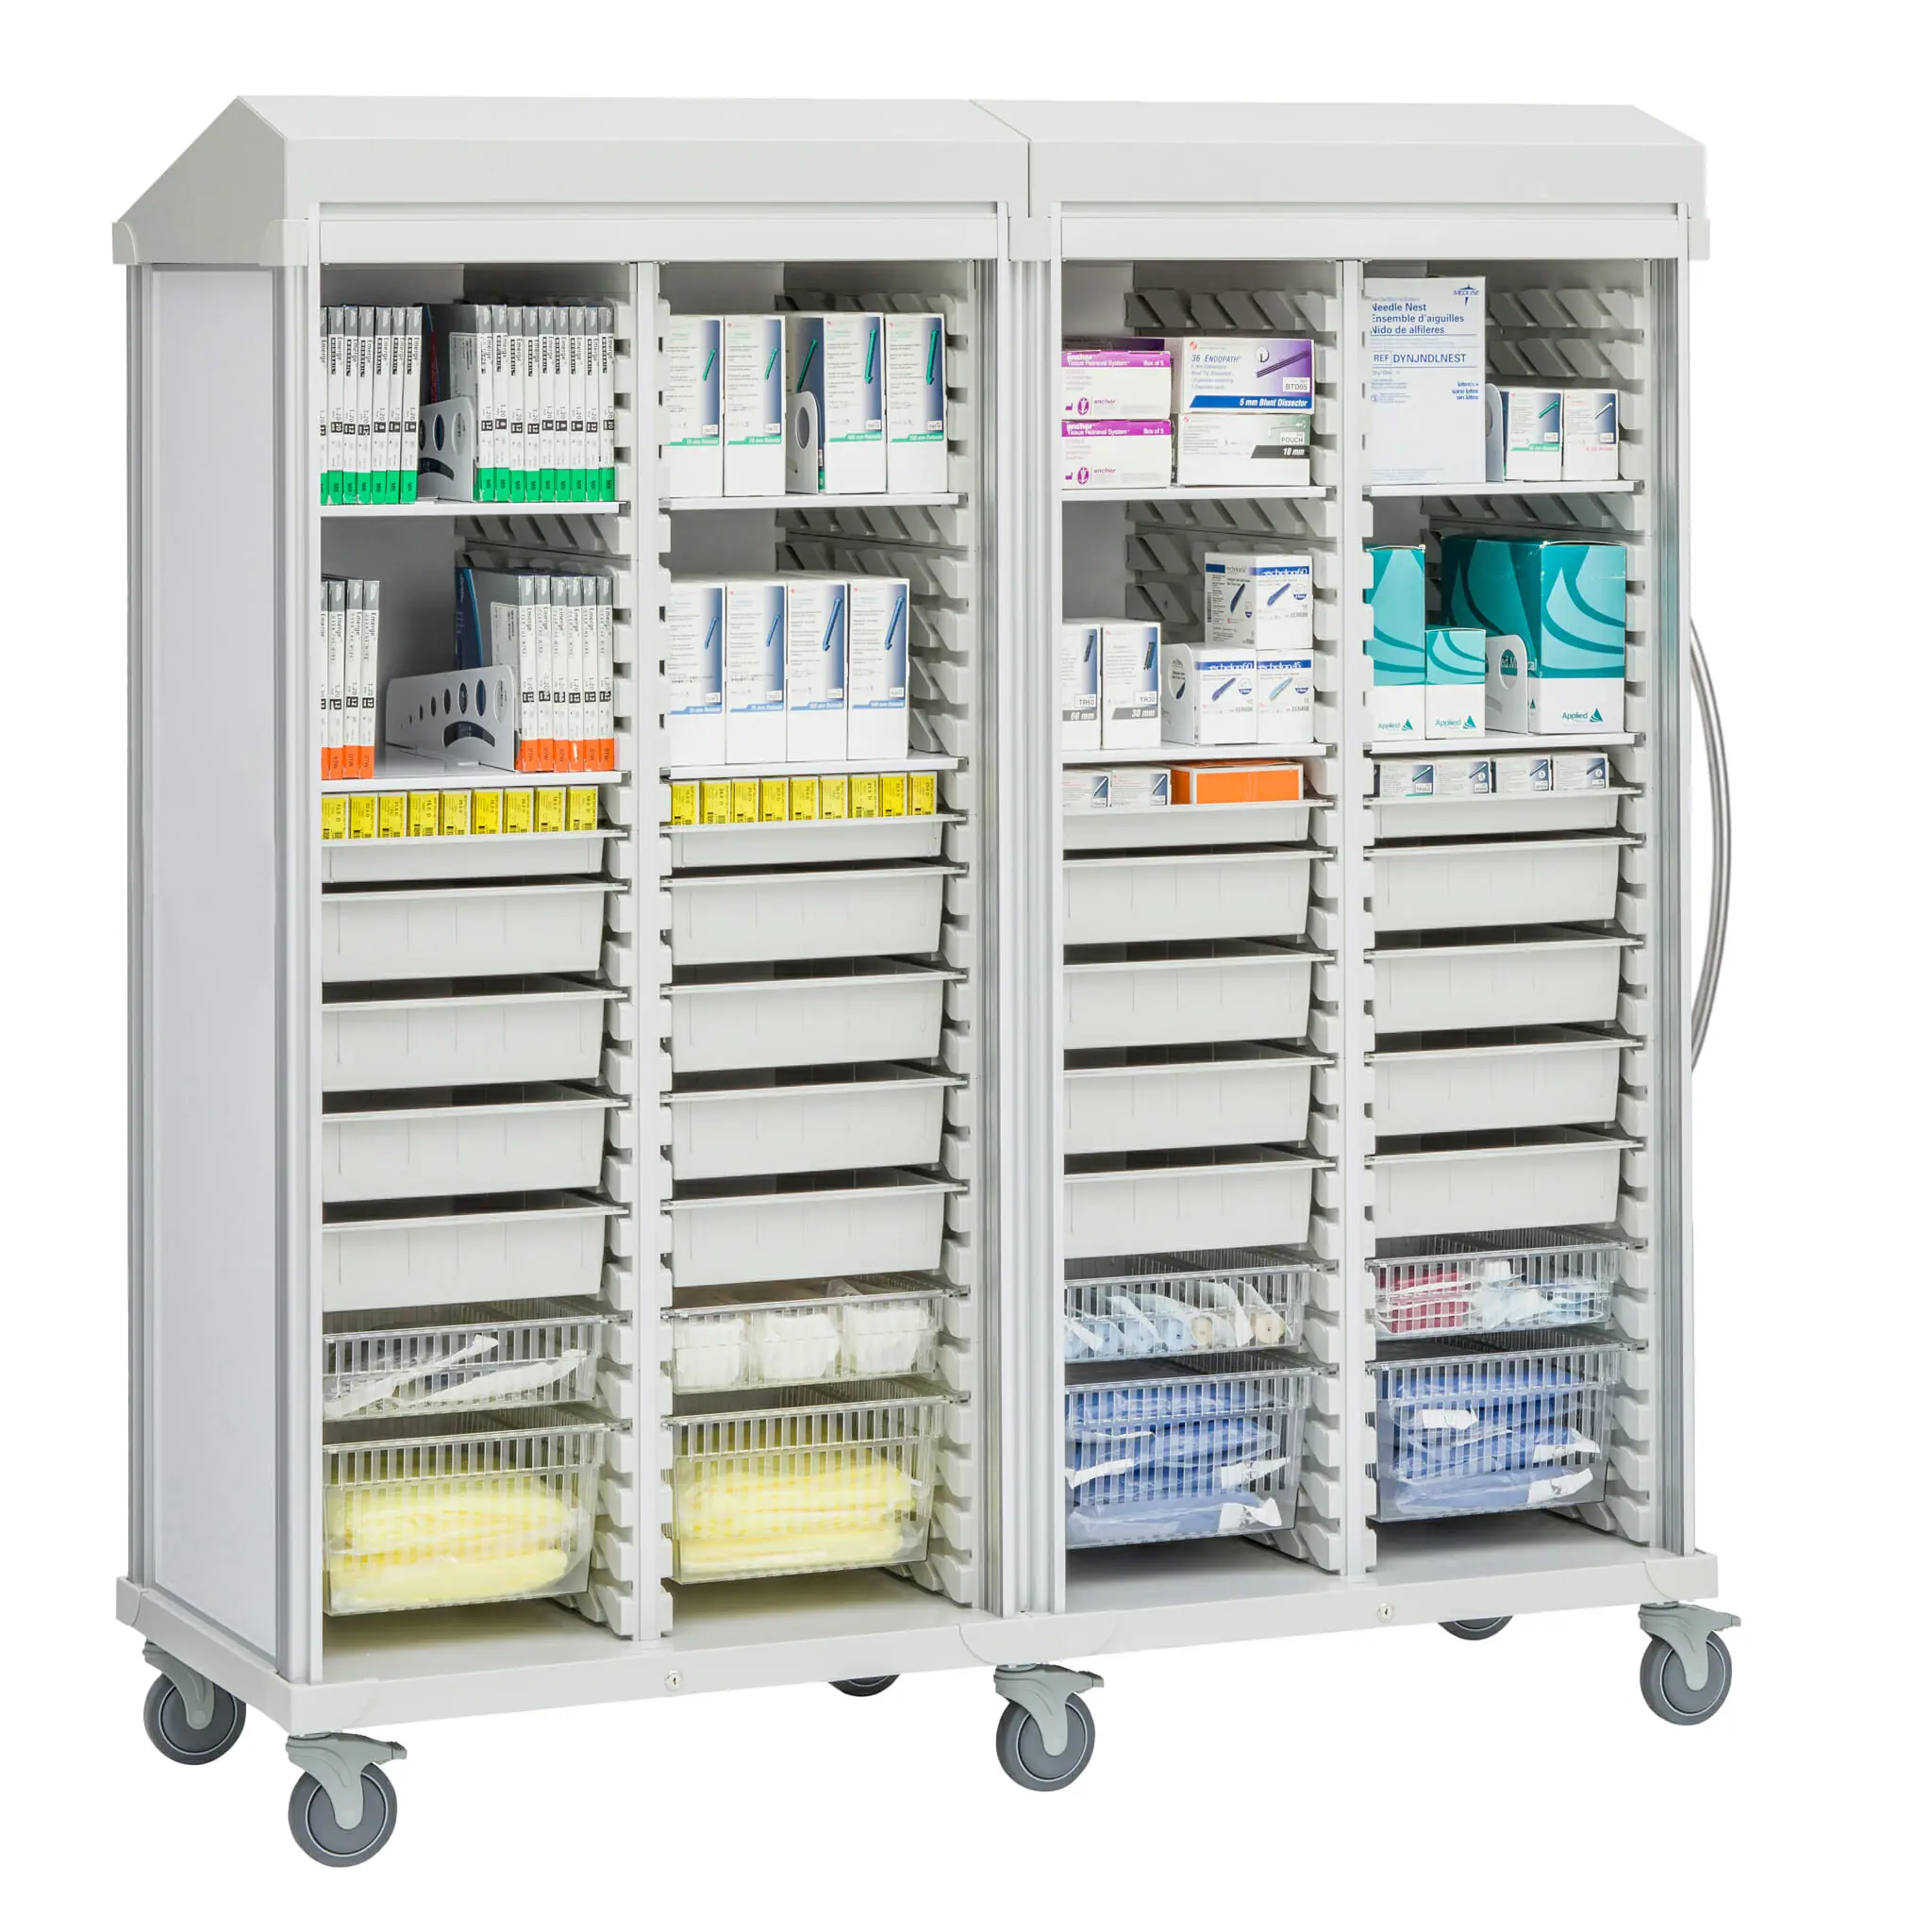 Medical supply storage, Storage shed organization, Medical cart